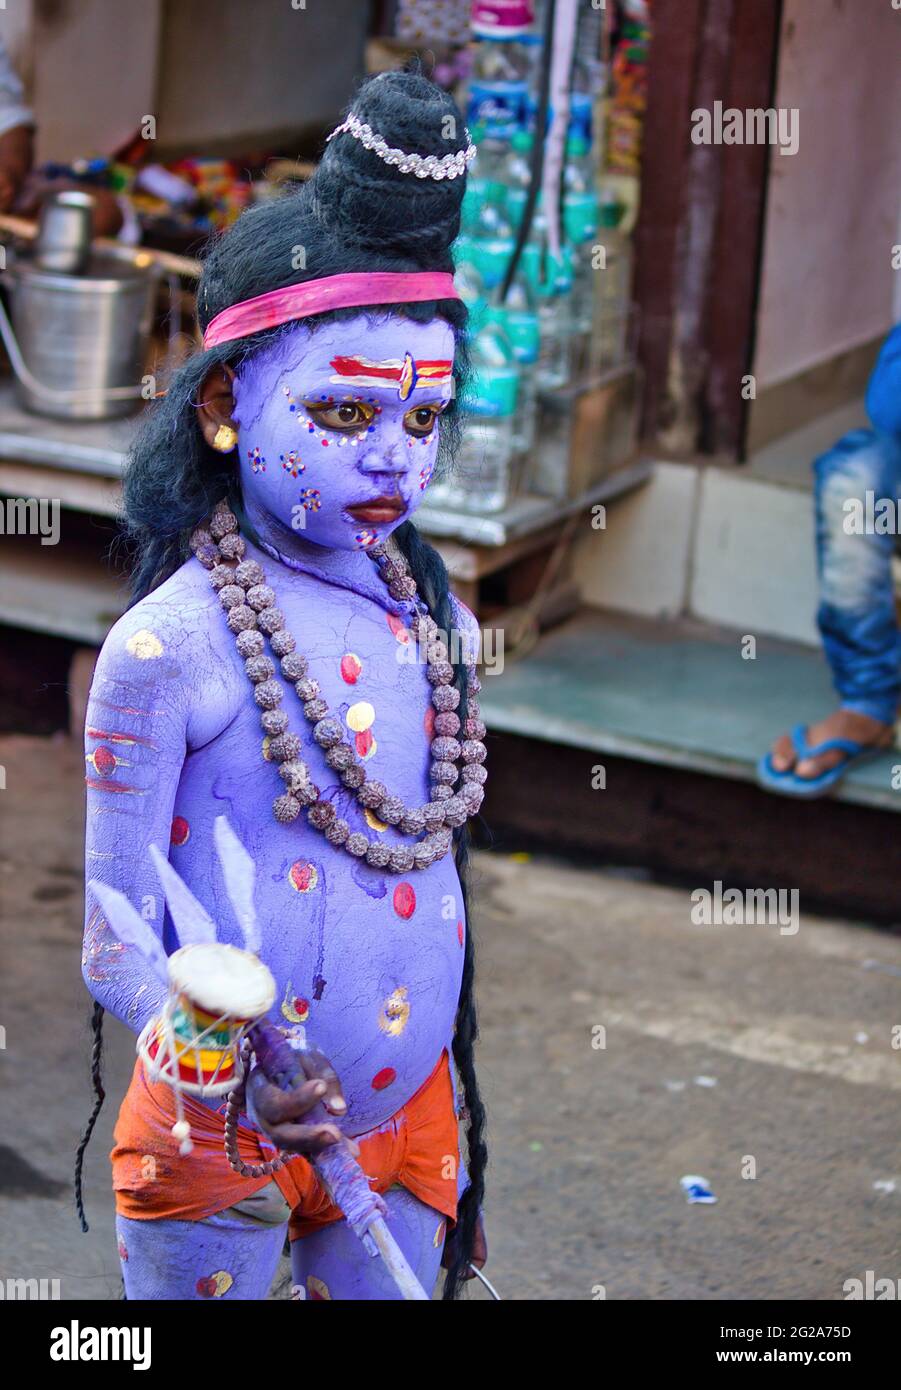 Pushkar, India - NOVEMBER 10, 2016: An unidentified boy dressed ...